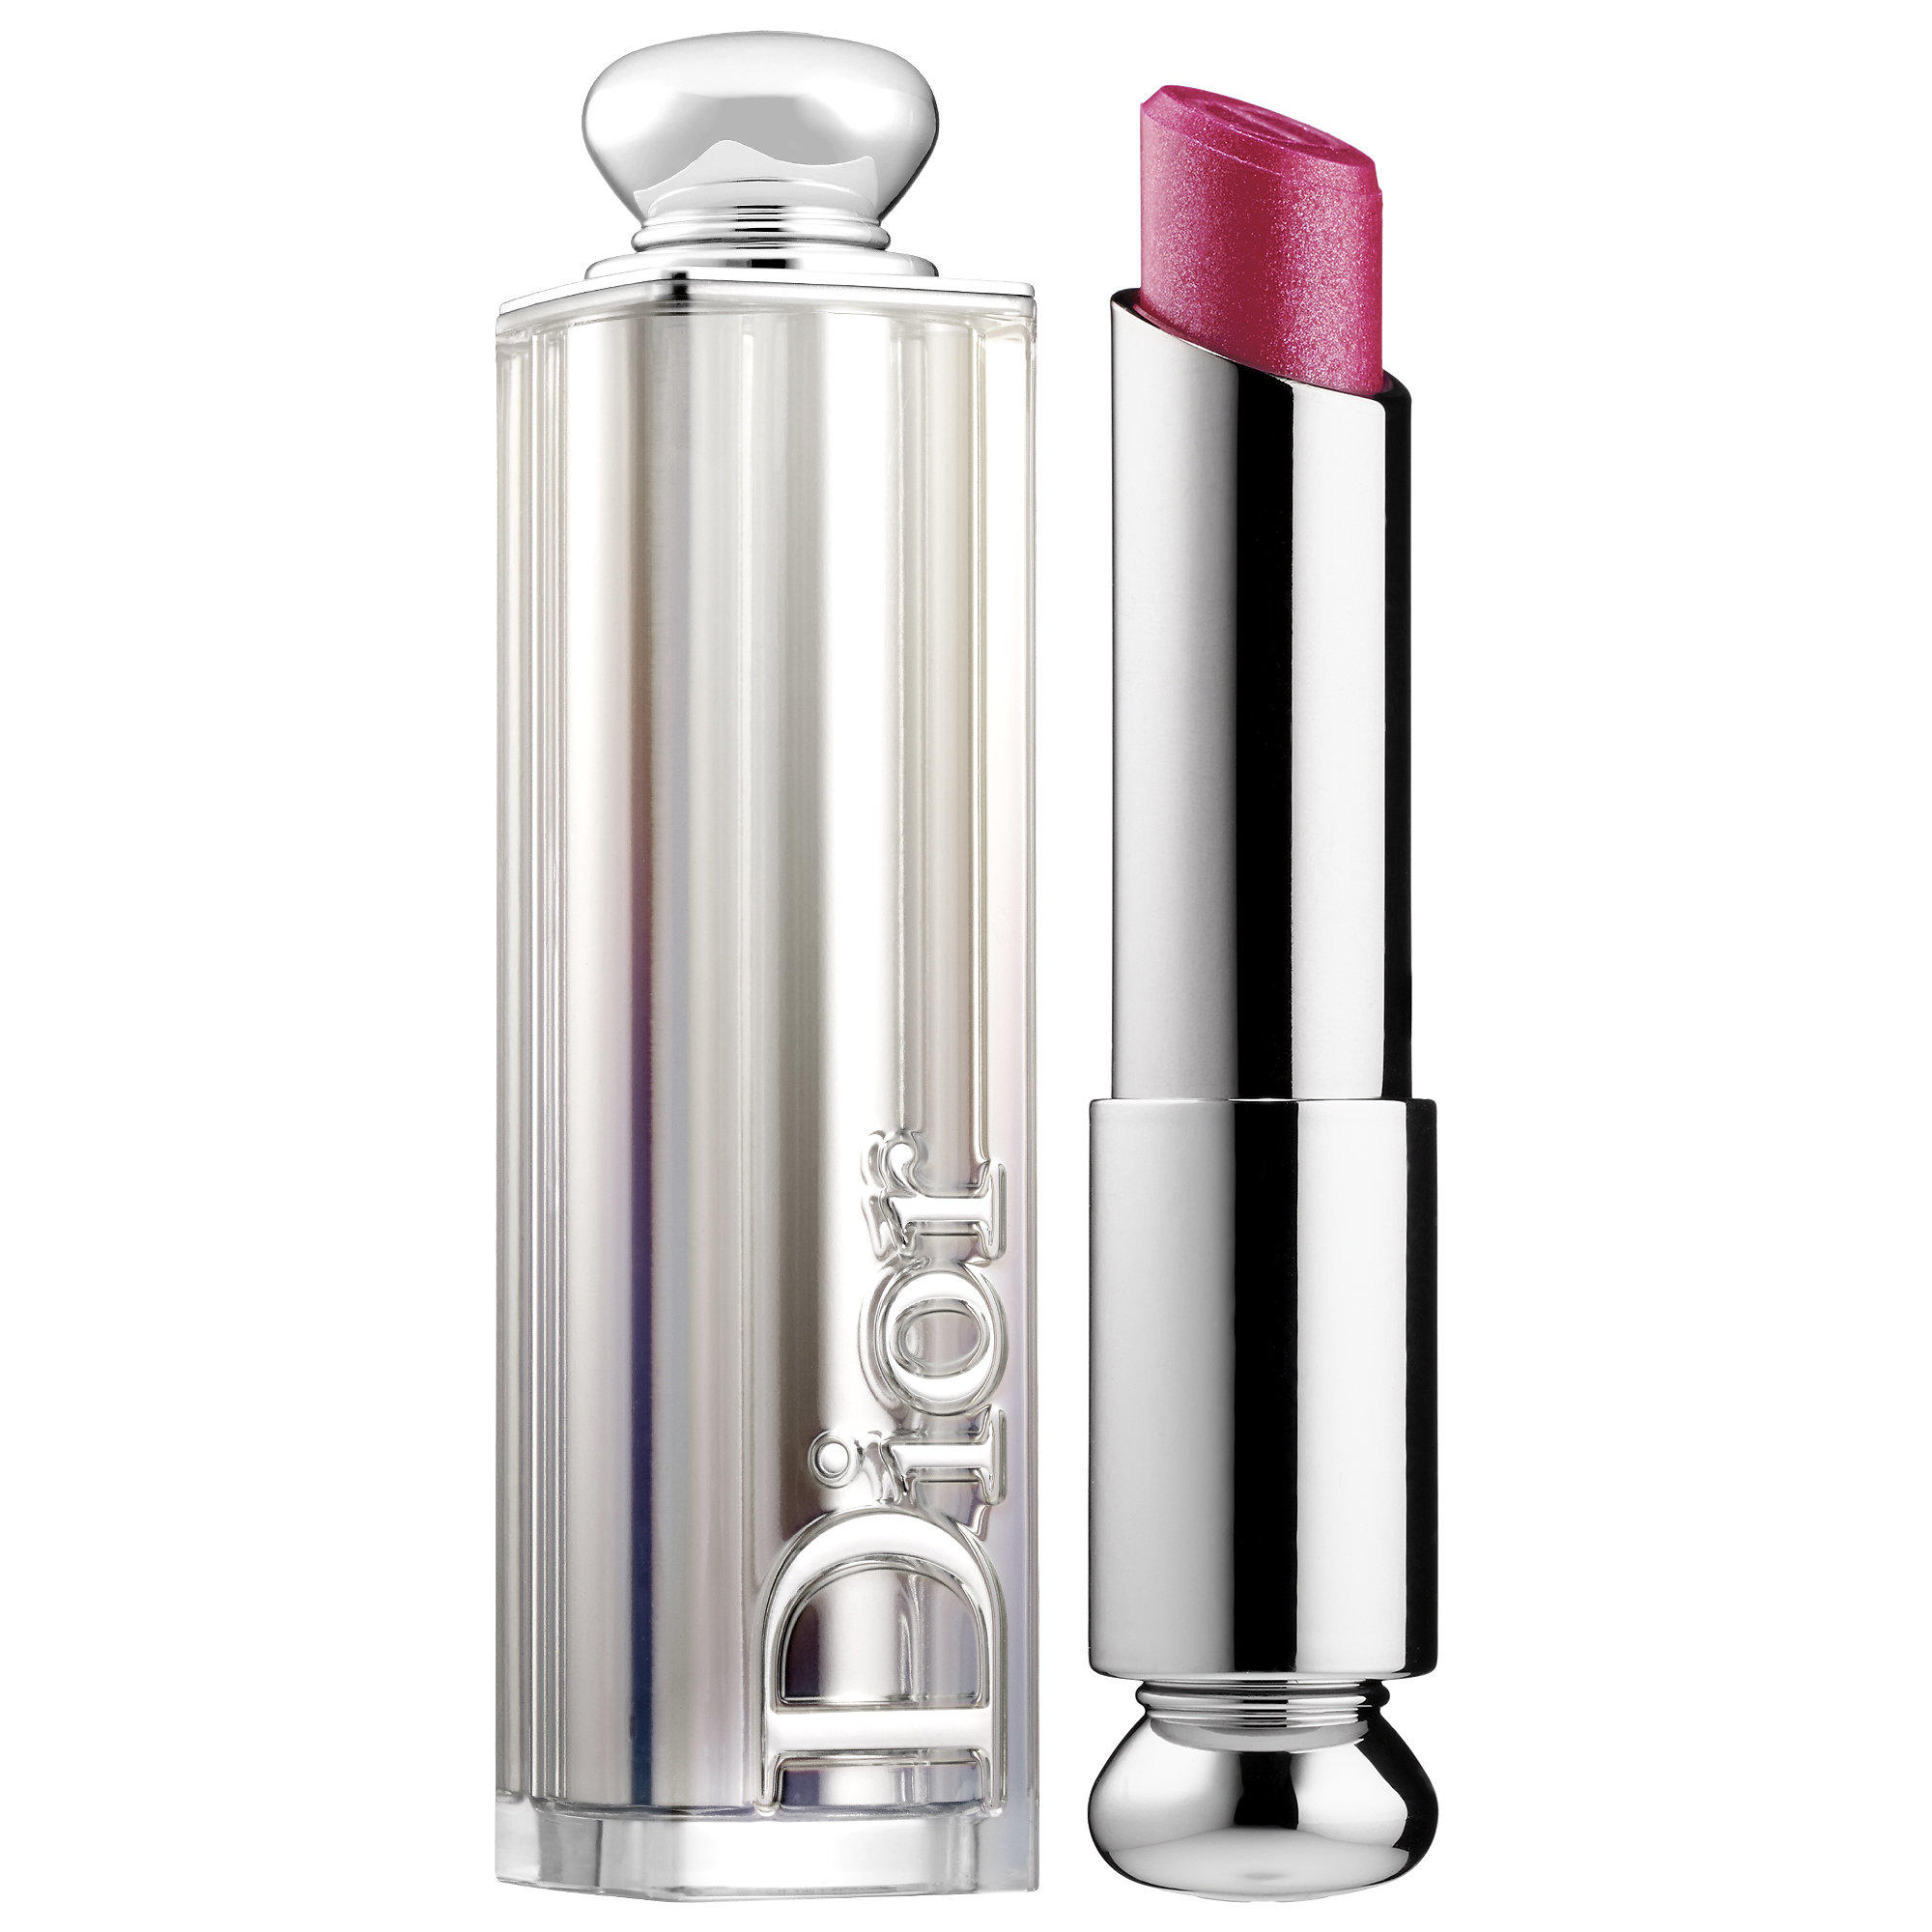 dior lipstick 771